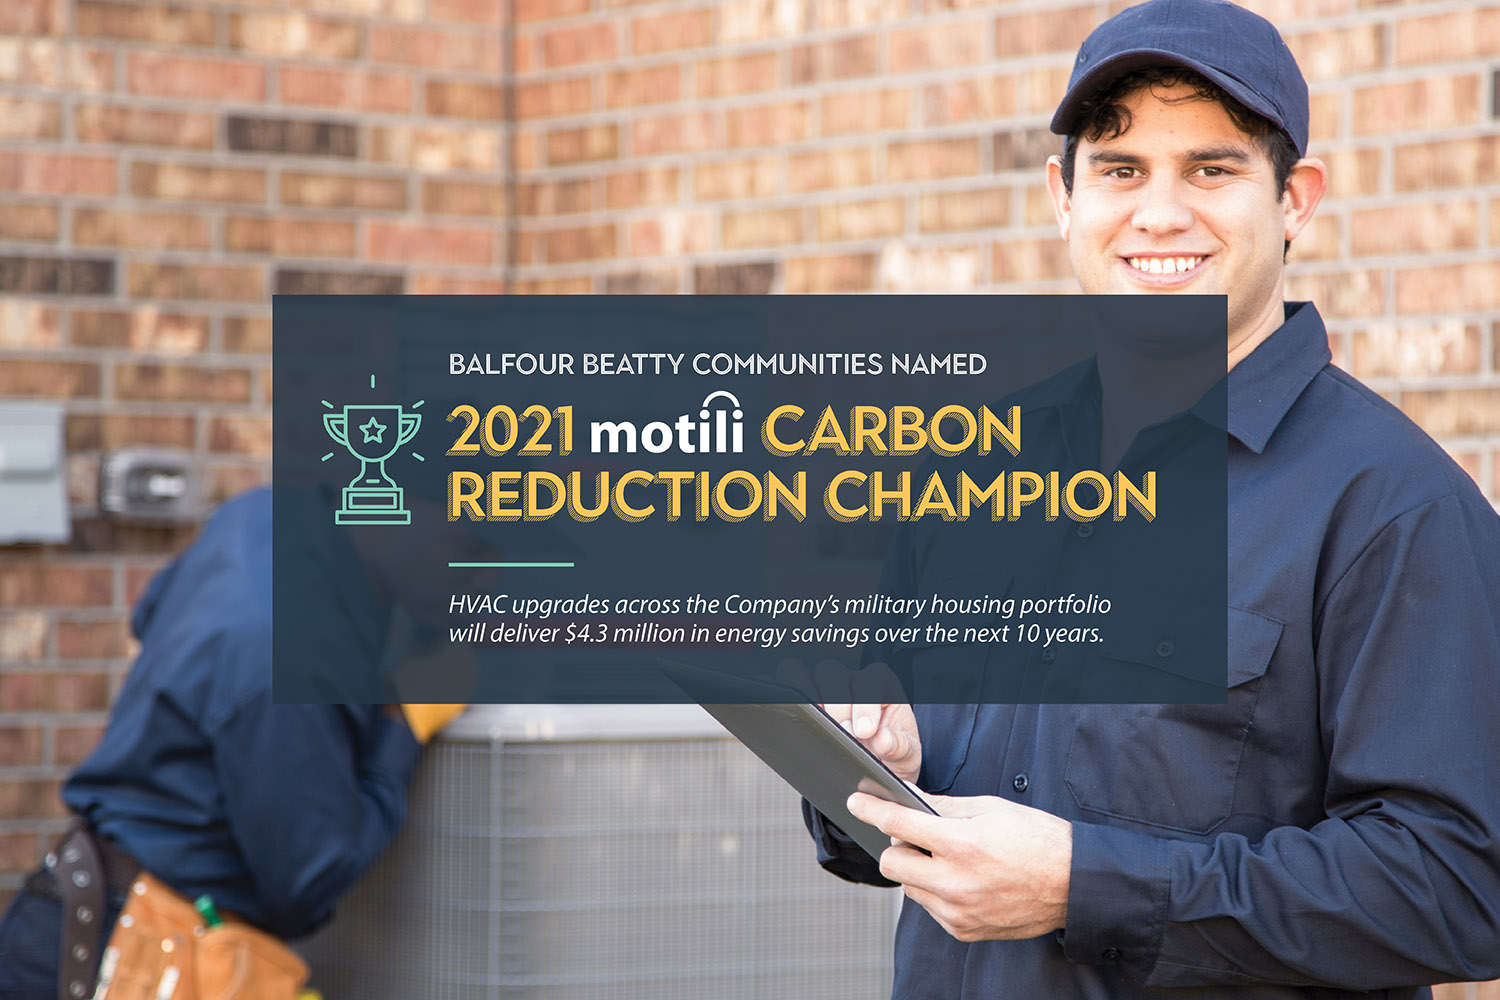 Balfour Beatty Communities Named 2021 Motili Carbon Reduction Champion